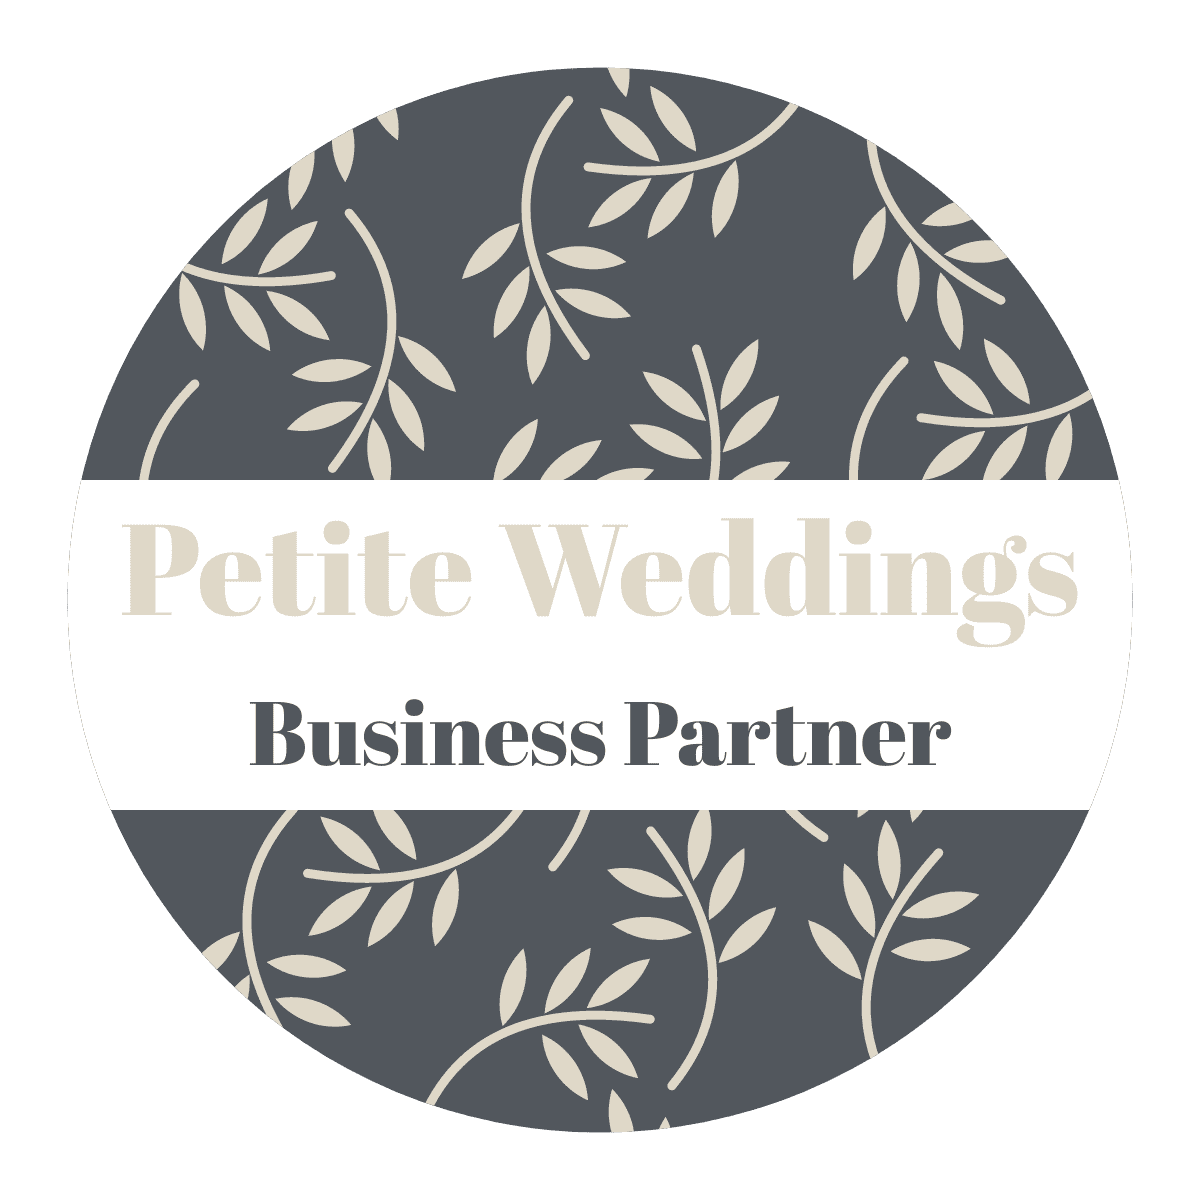 Petite Wedding Business Partner logo